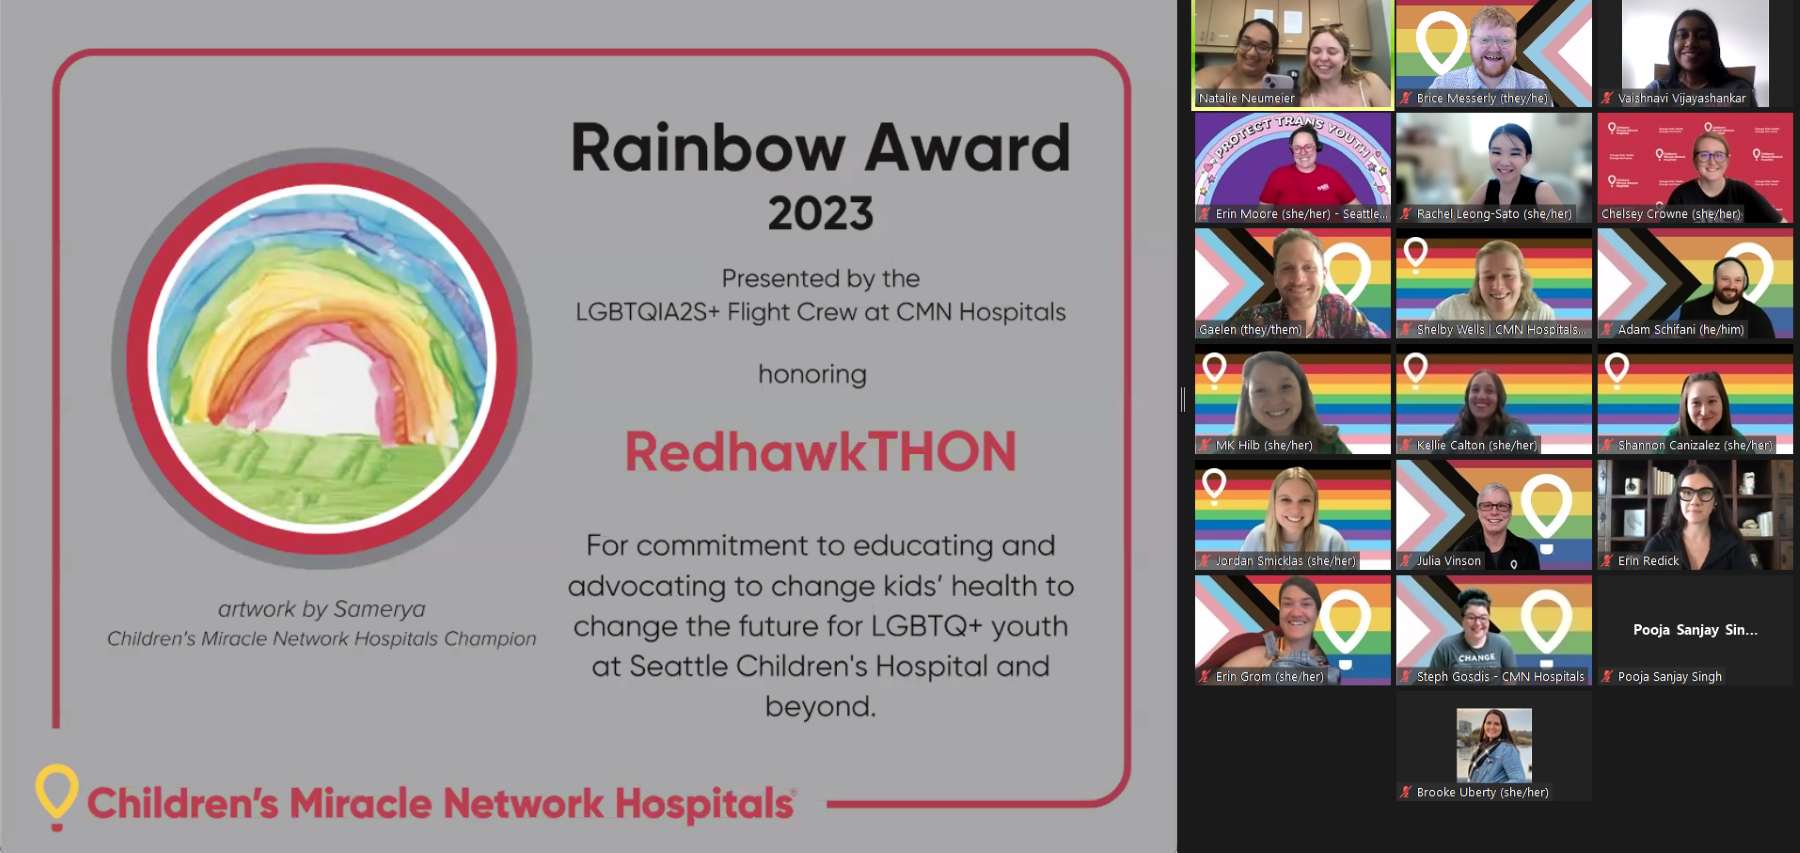 RedhawkTHON Award